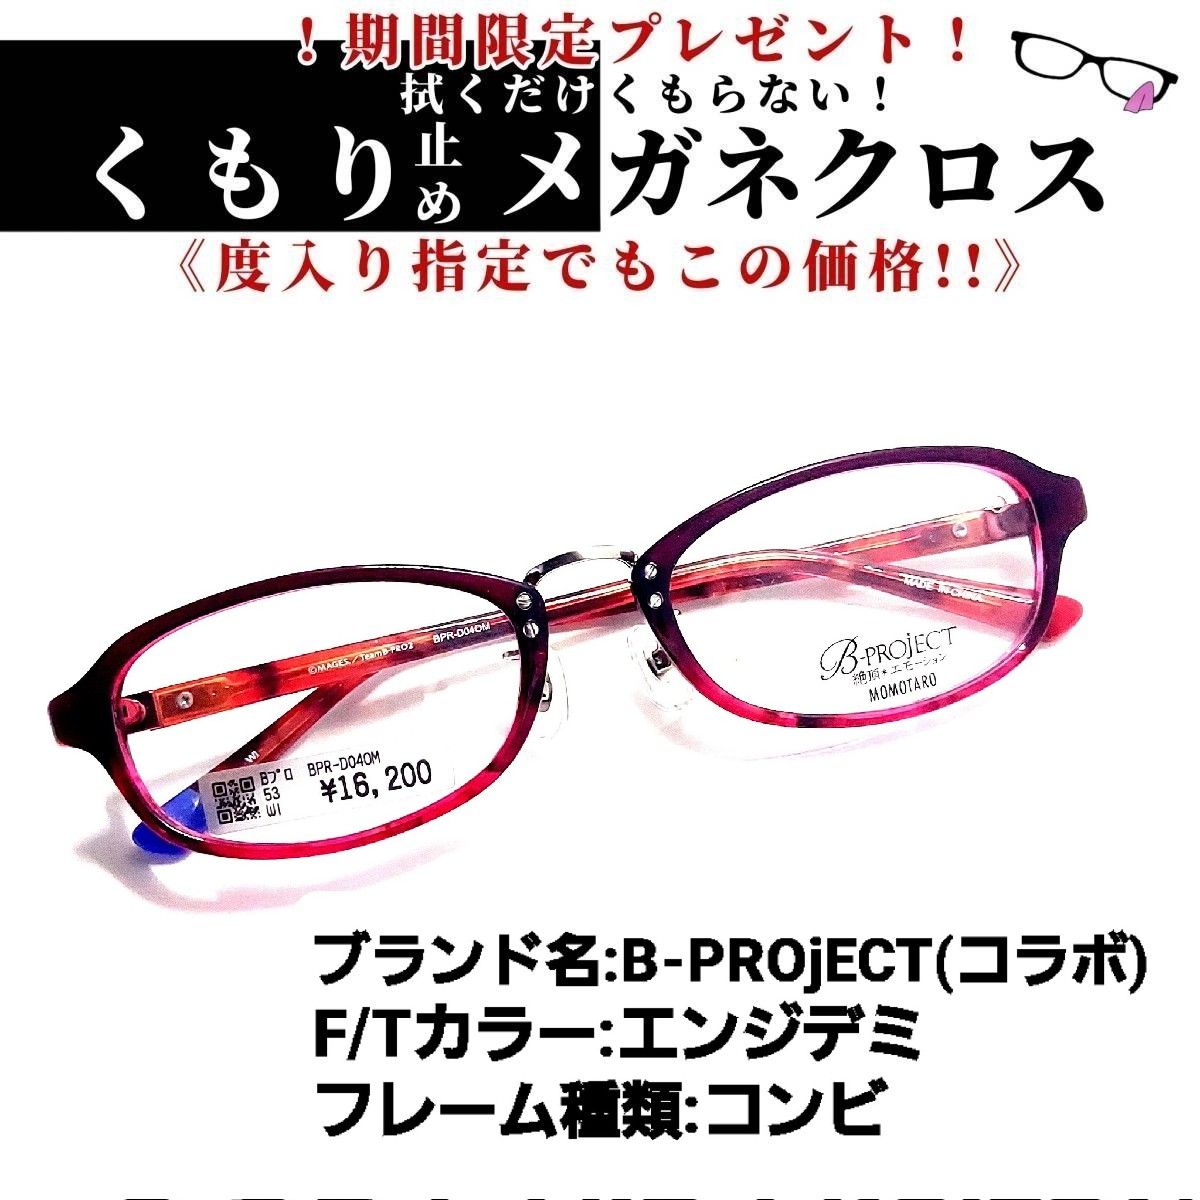 No.1069+メガネ『B-PROJECT』MOMOTARO【度数入り込み価格】 - スッキリ